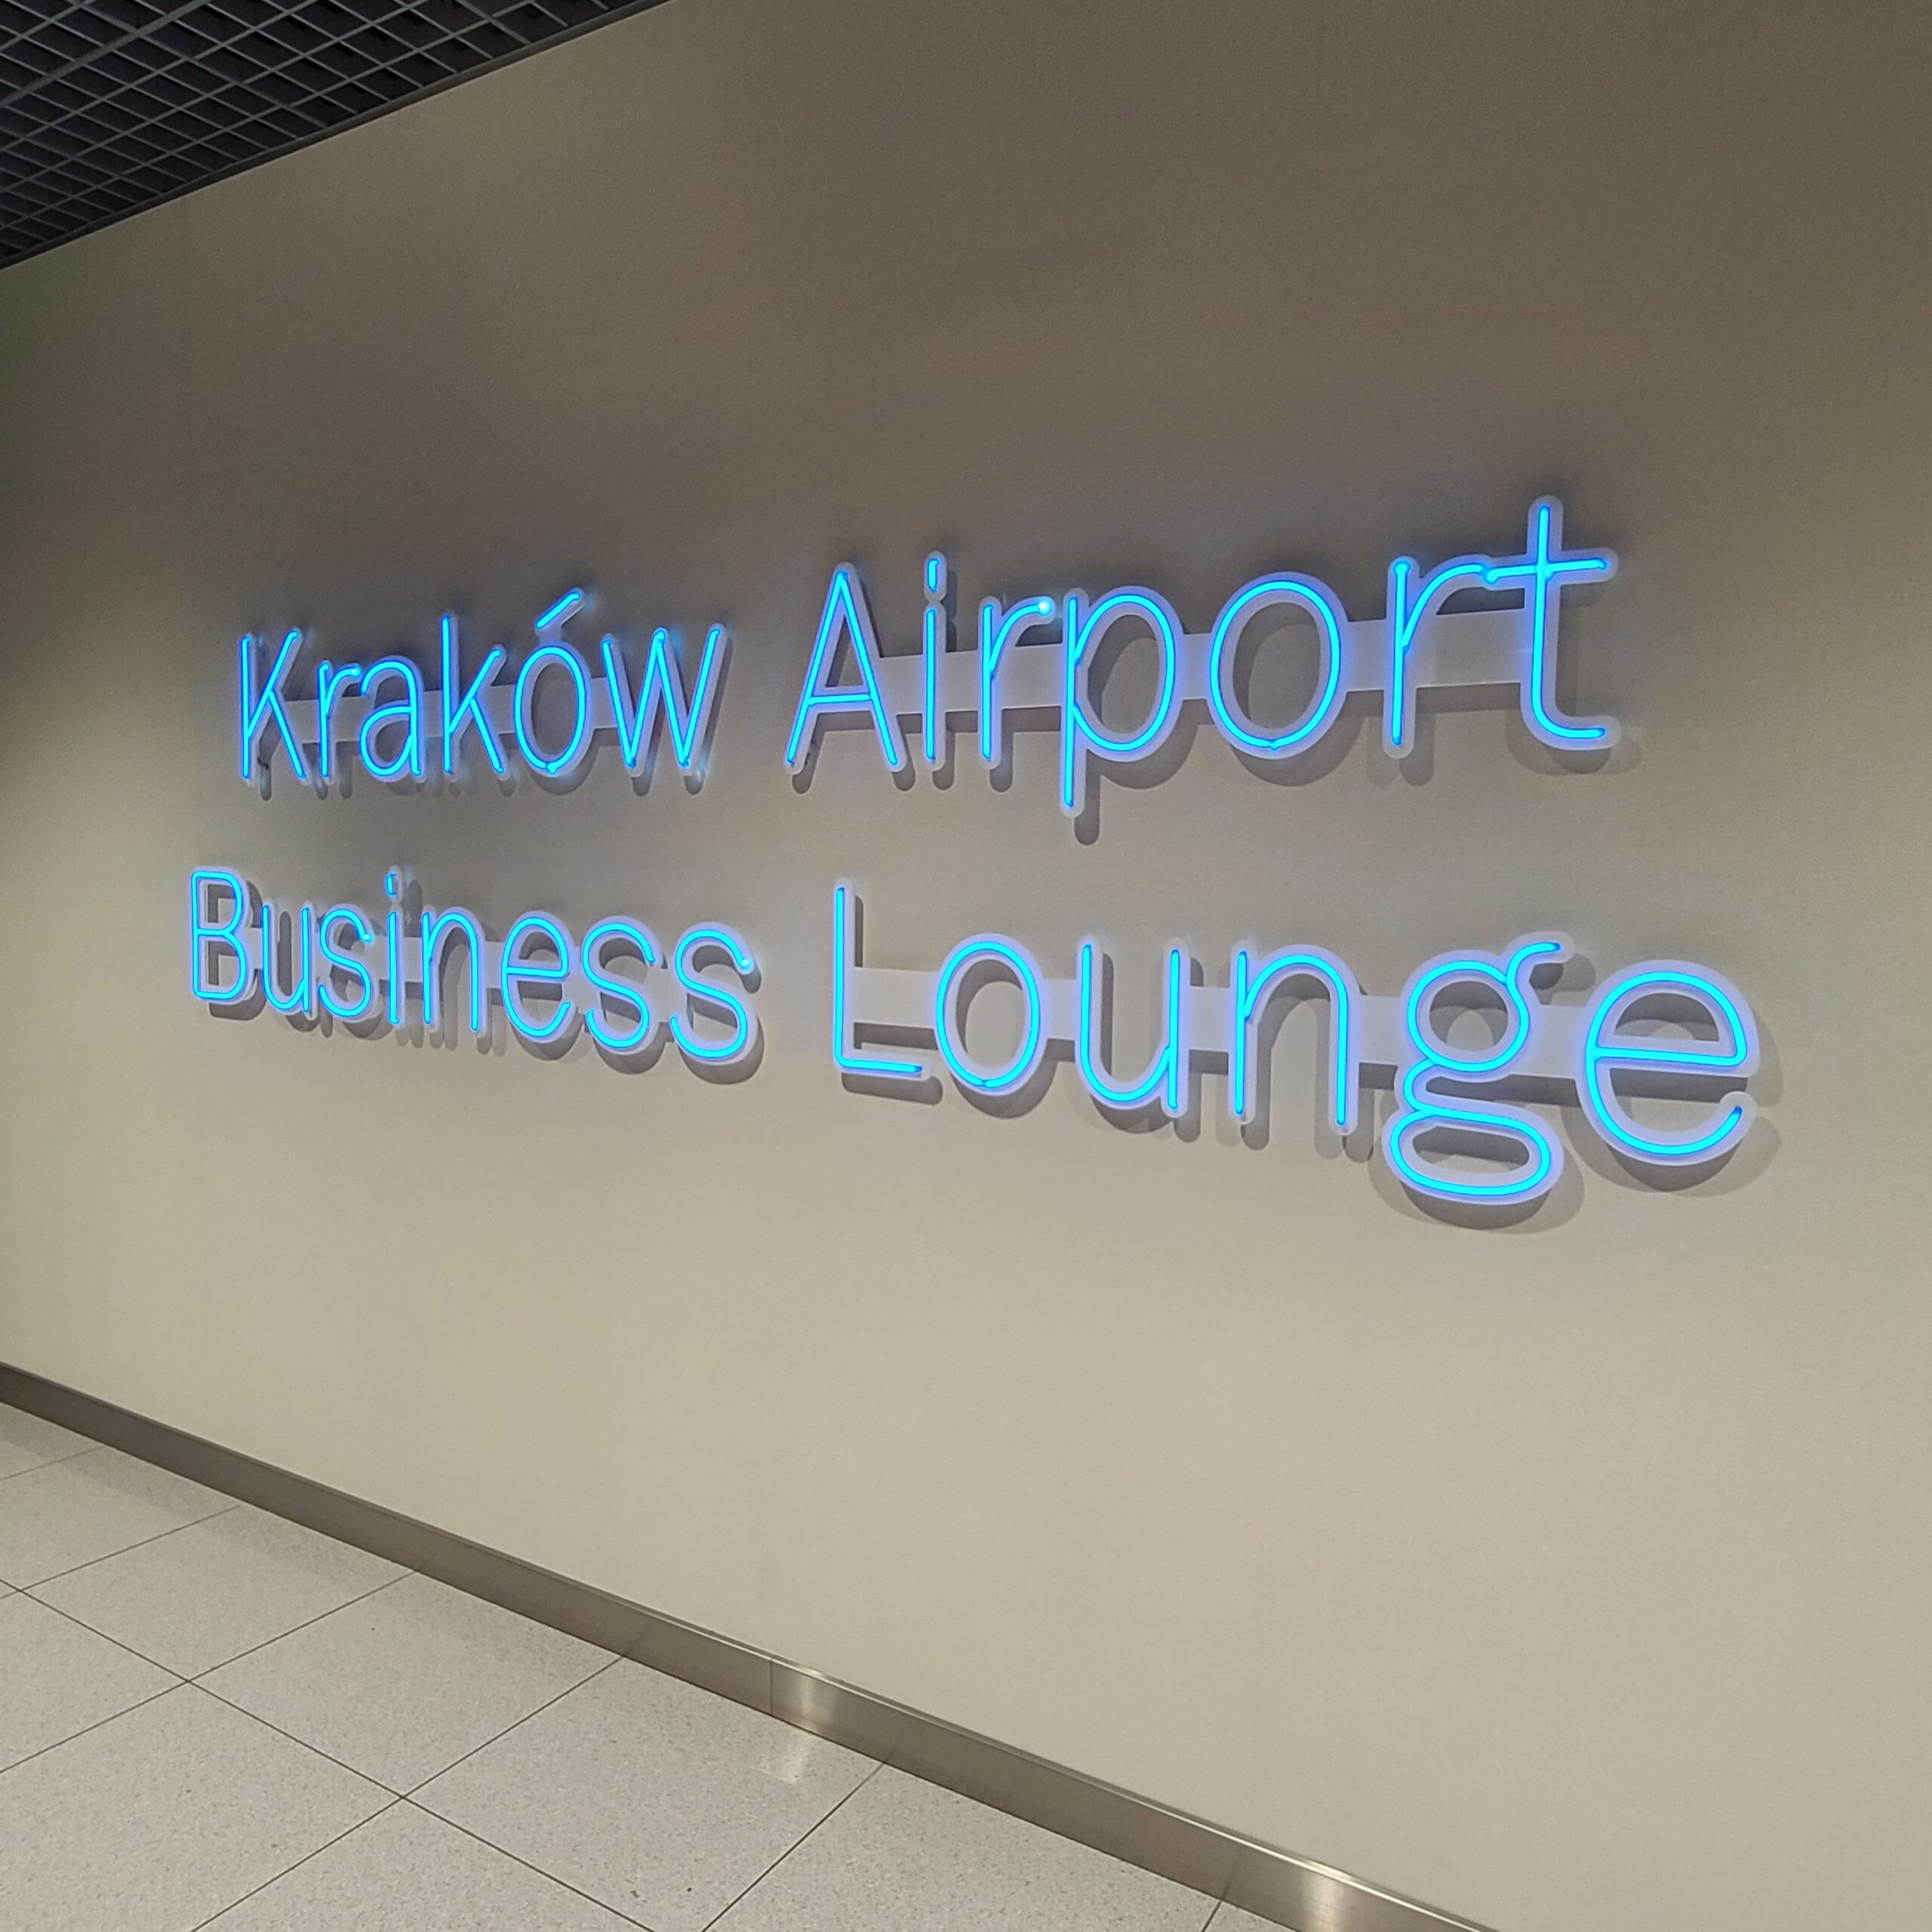 Krakow Airport Business Lounge